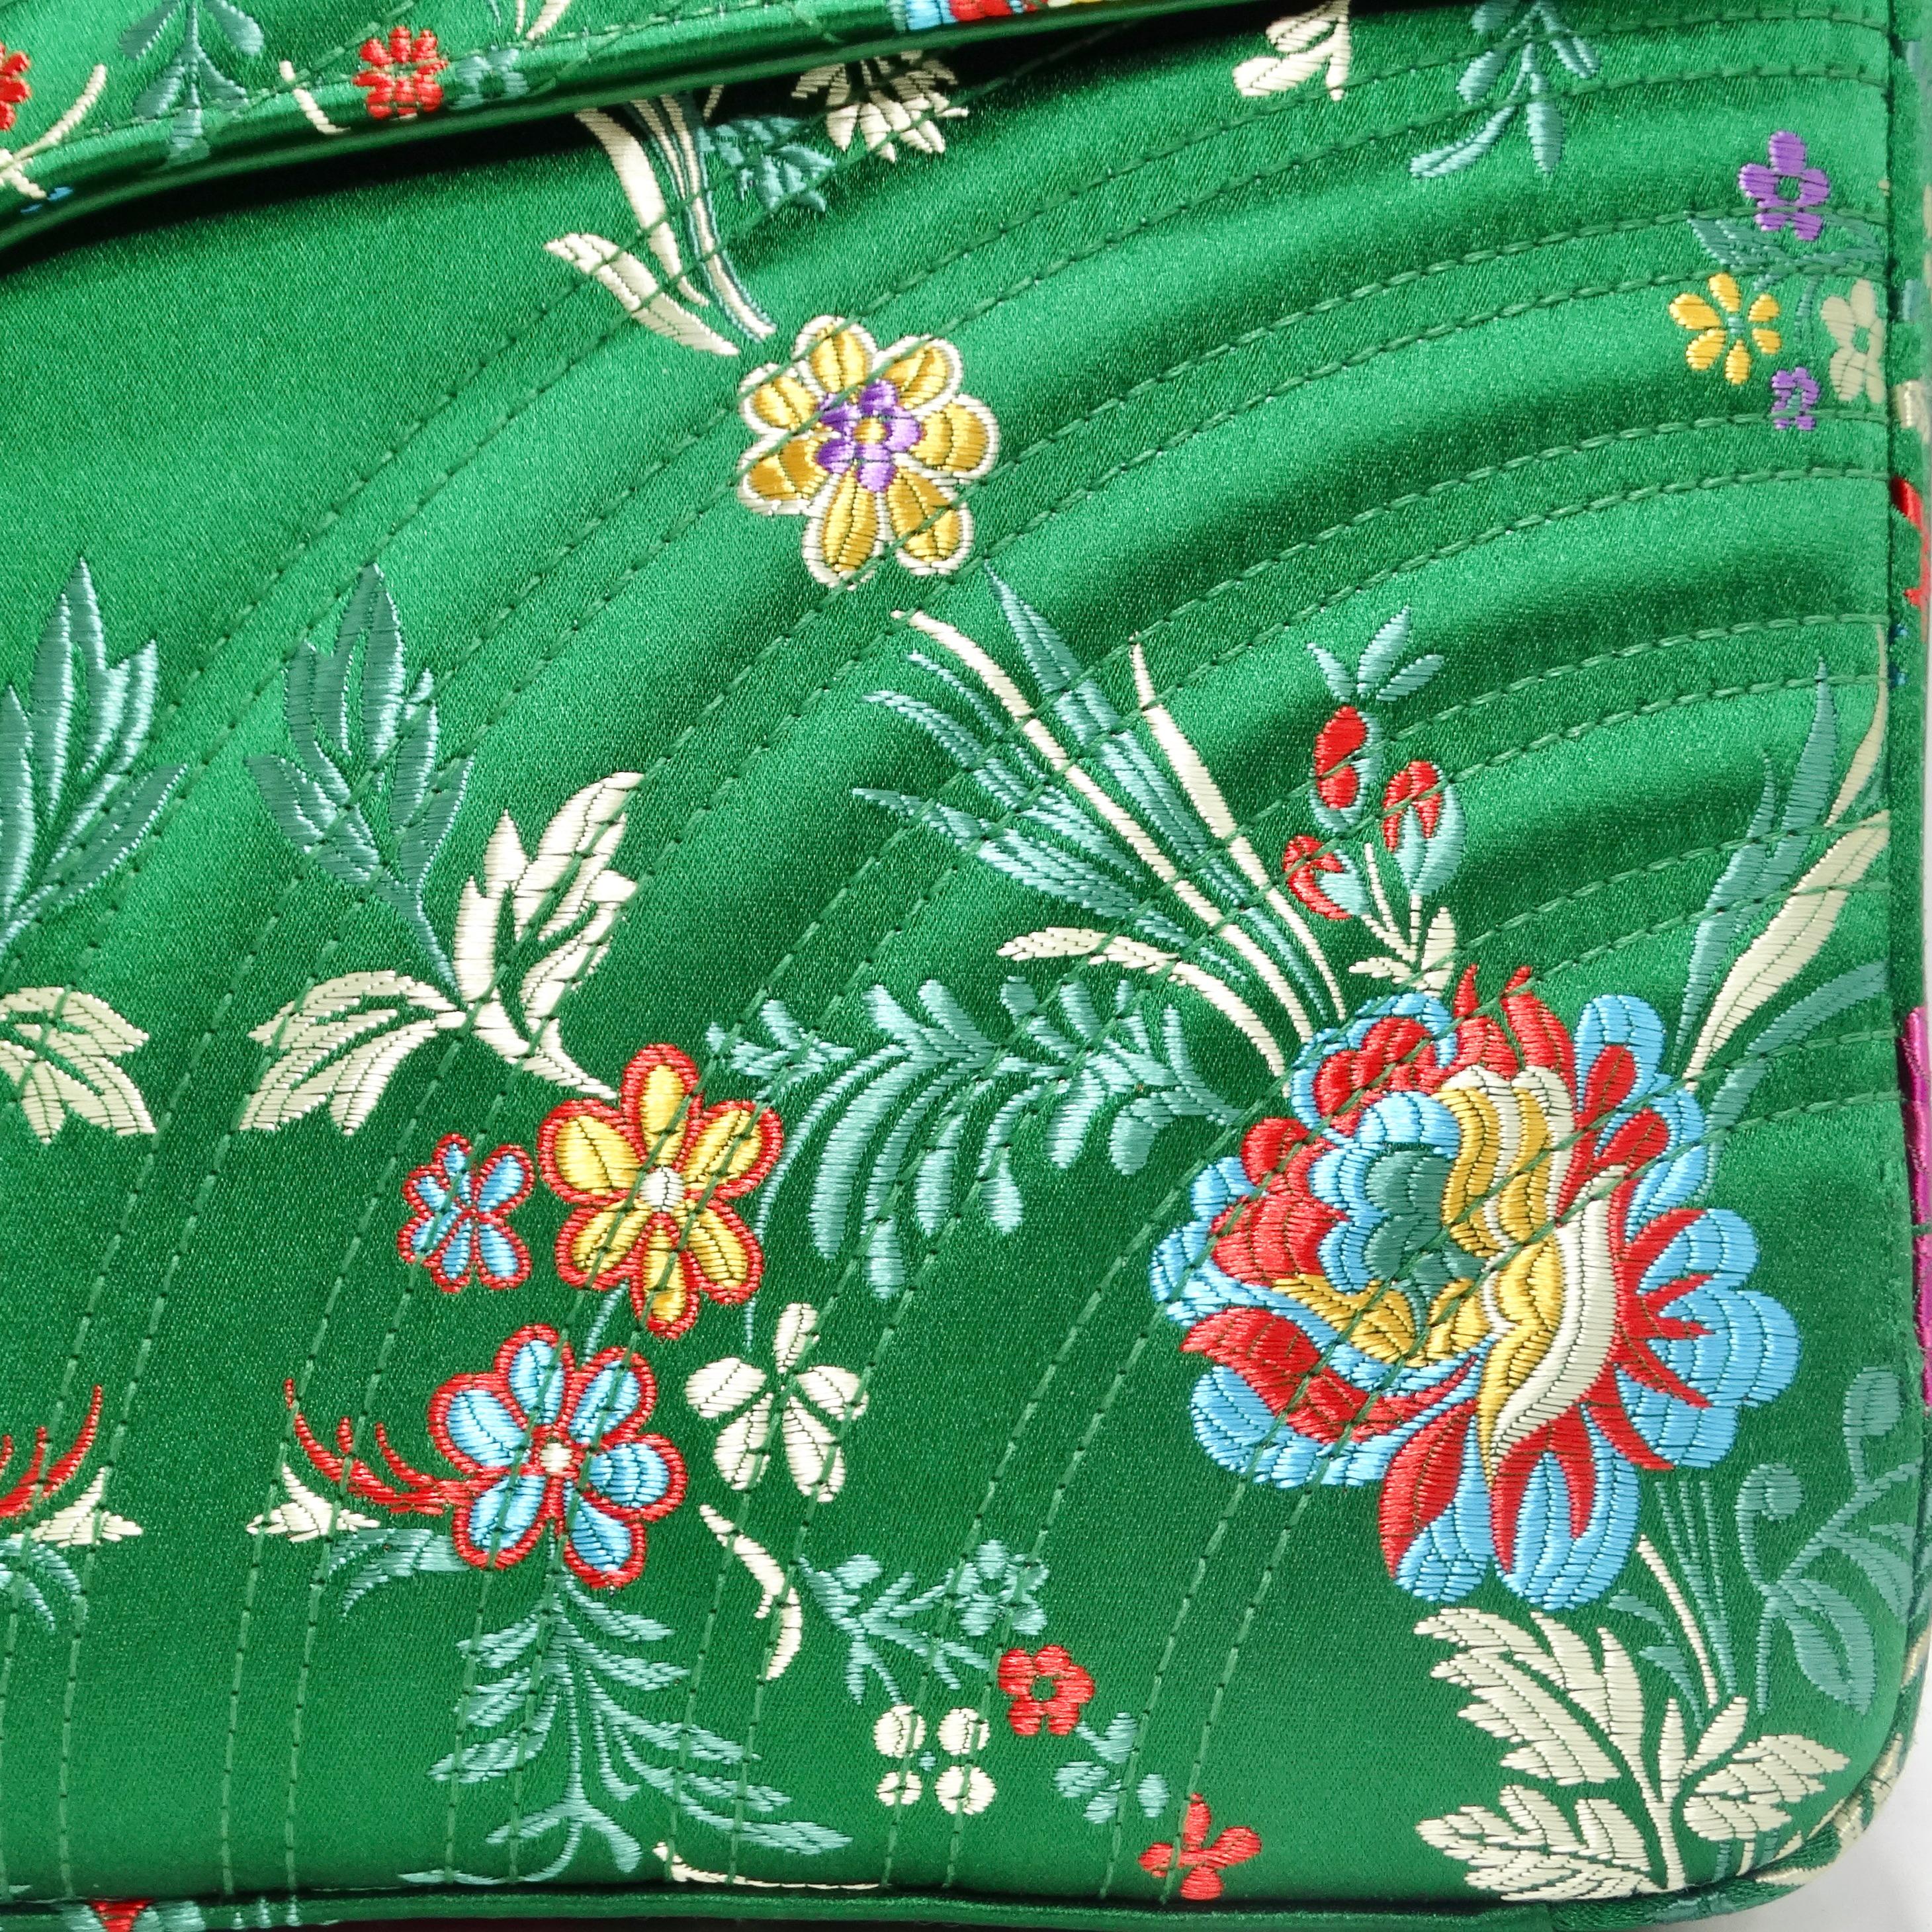 Gucci Marmont Jacquard Matelasse Floral Maxi Top Handle Shoulder Bag  In Excellent Condition For Sale In Scottsdale, AZ